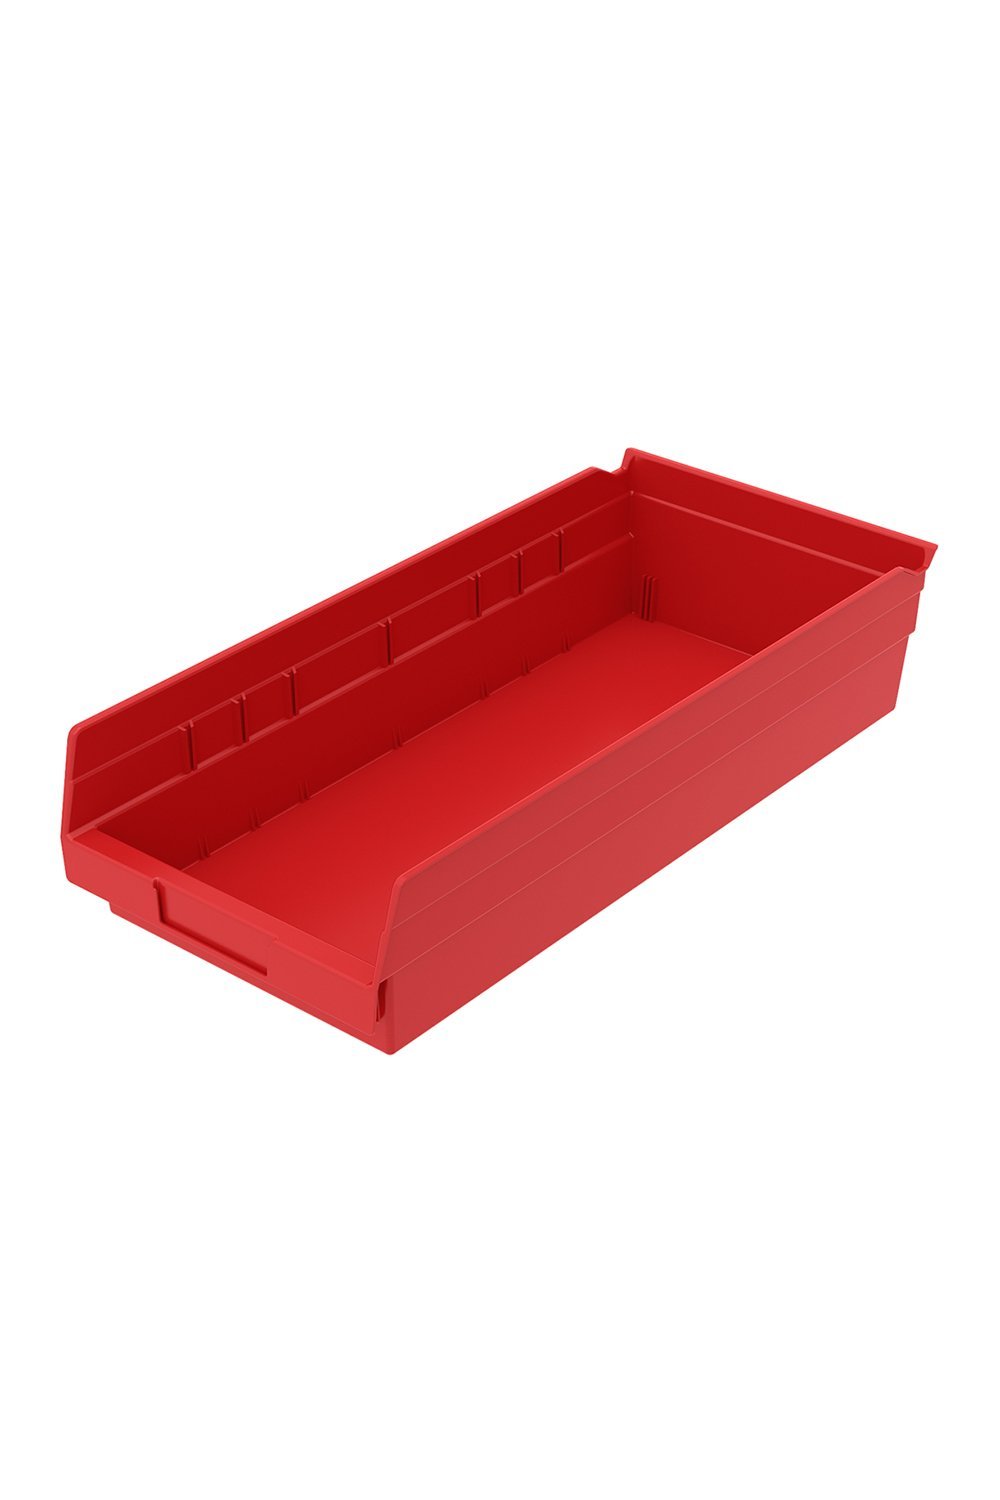 Shelf Bin for 18"D Shelves Bins & Containers Acart 17-7/8'' x 8-3/8'' x 4'' Red 